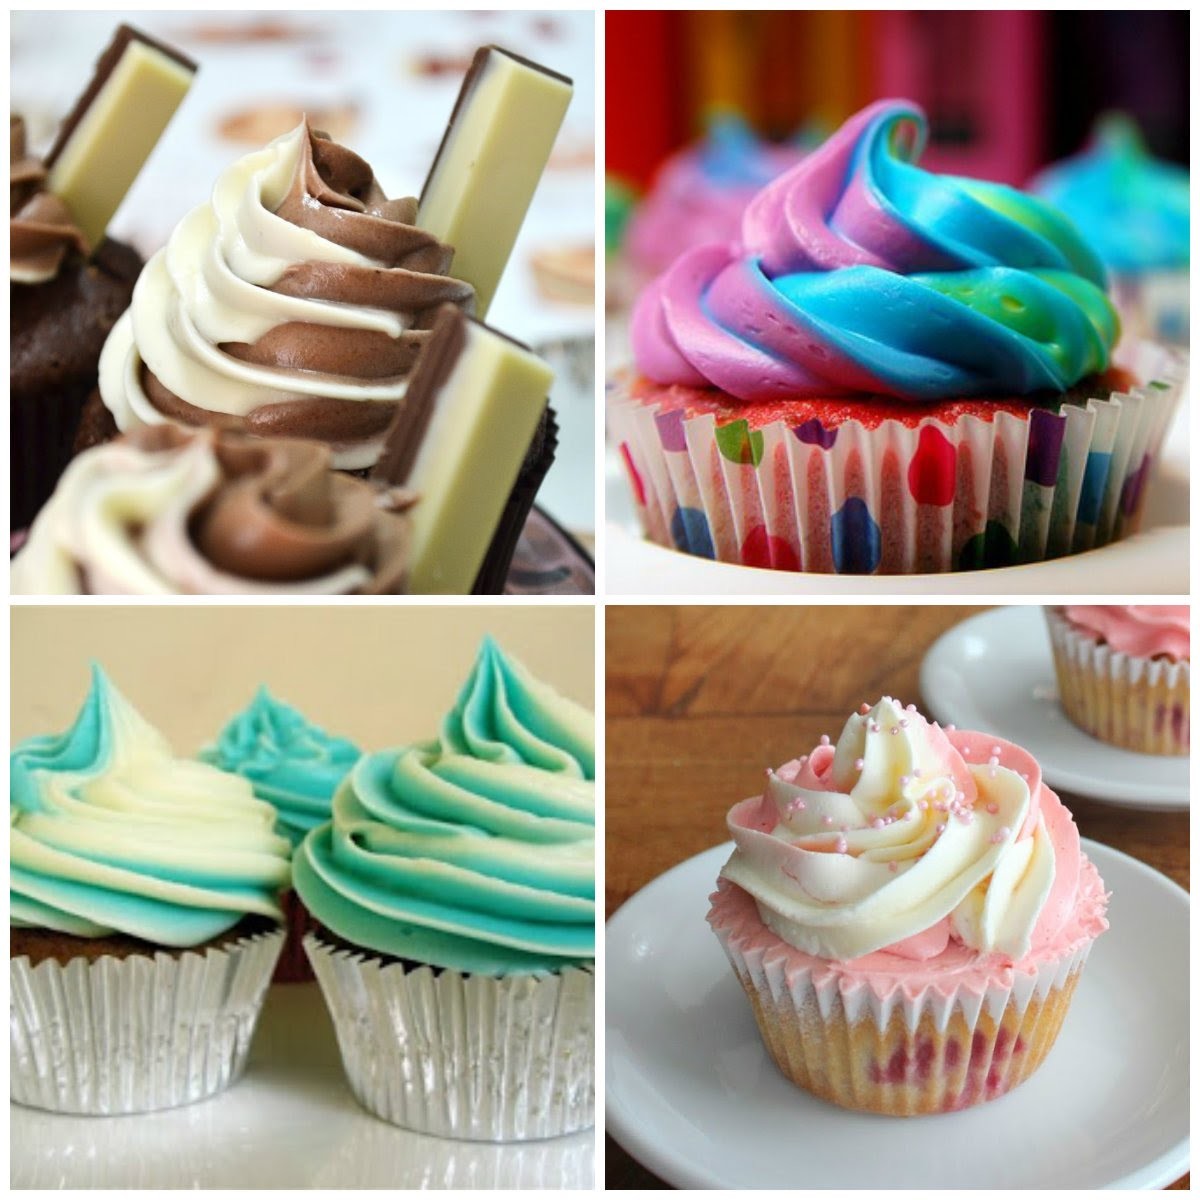 Cupcakes Decorados Con Crema De 2 Colores Muy Fácil - Madelin's Cakes